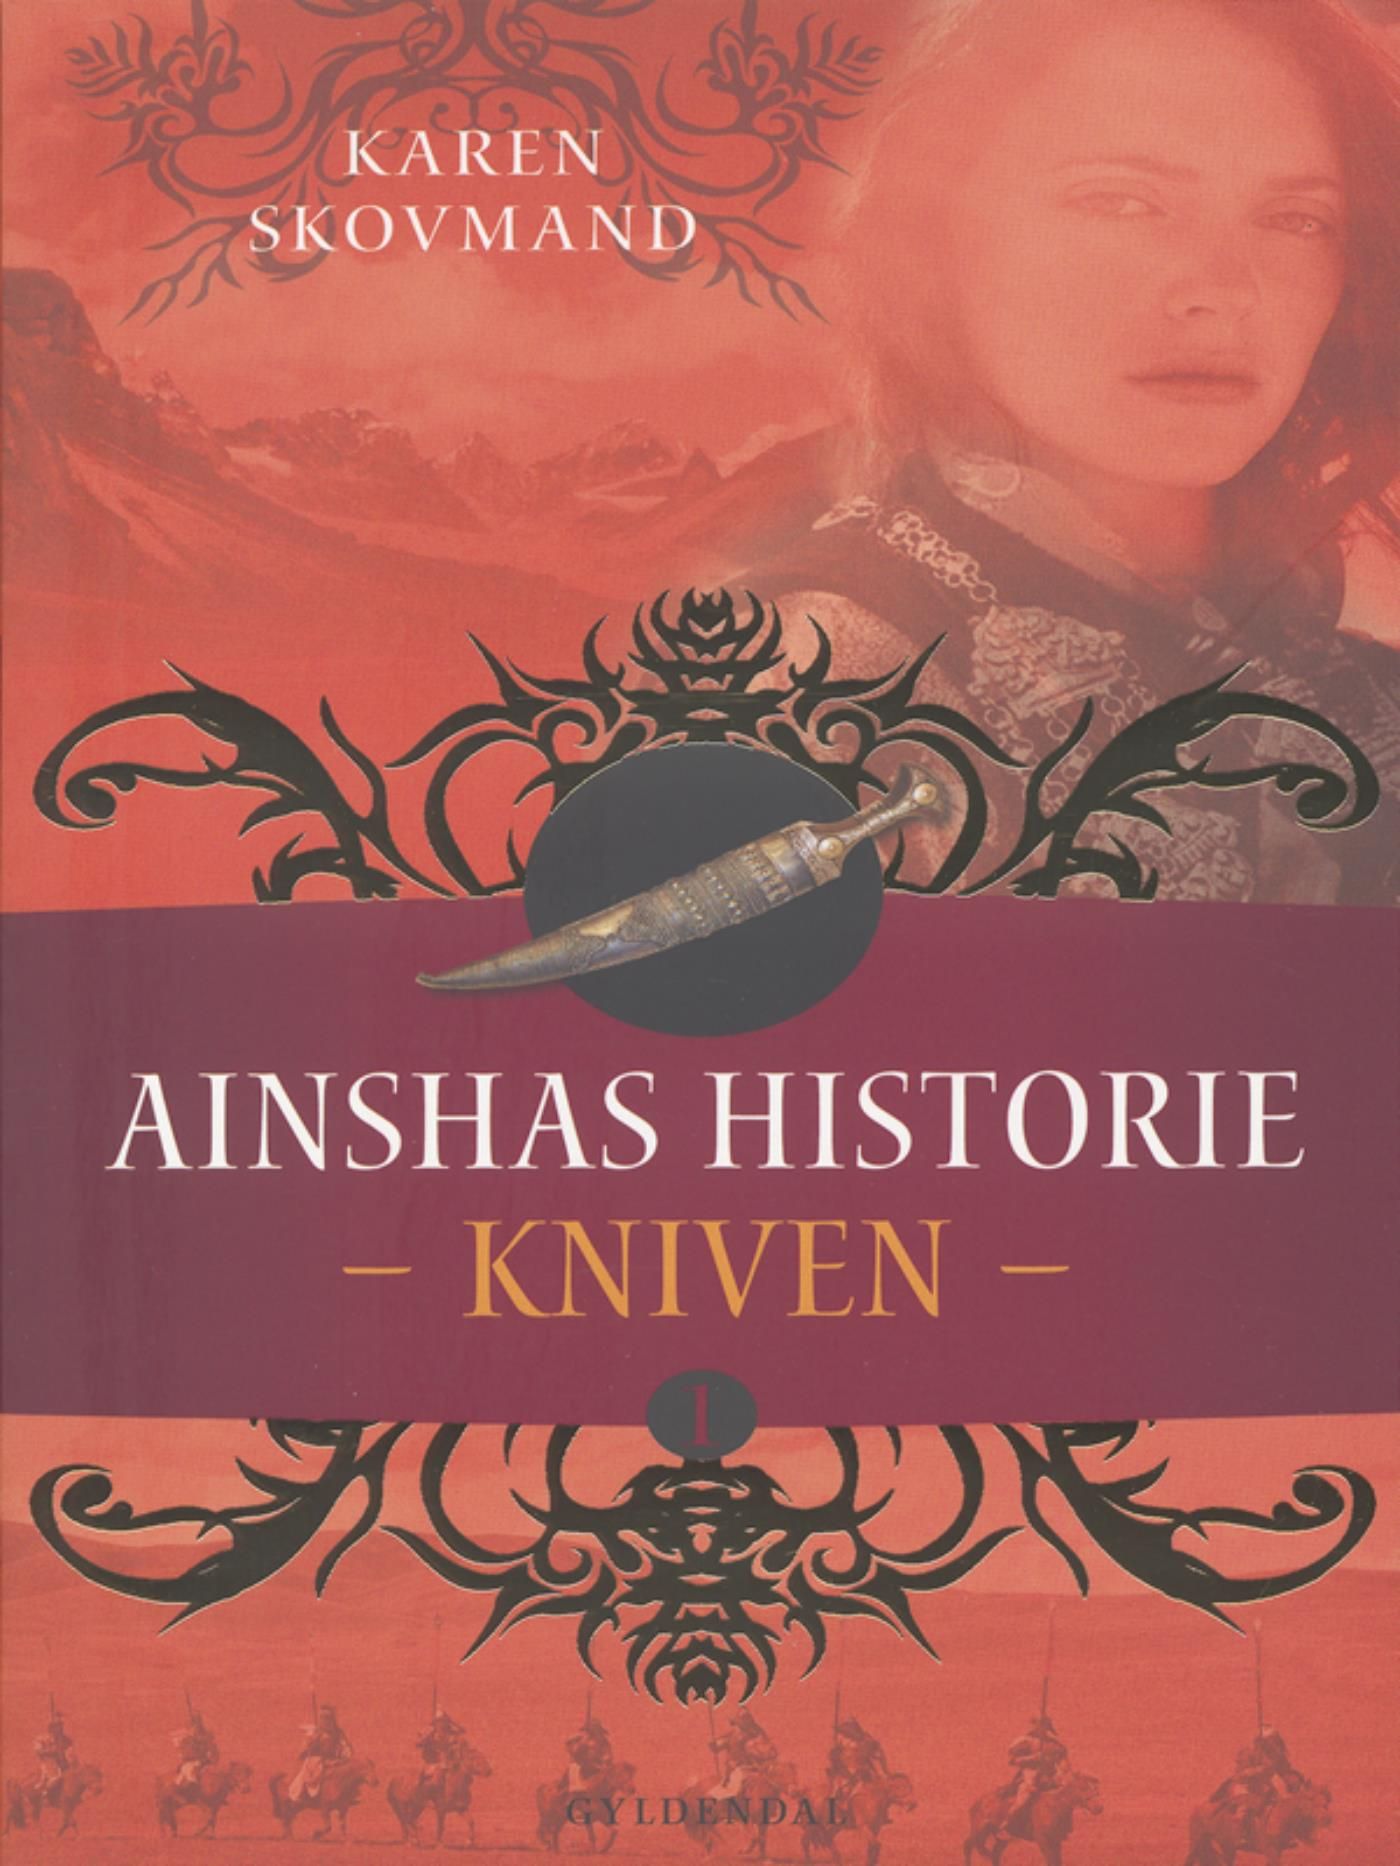 Ainshas historie 1 - Kniven, e-bog af Karen Skovmand Jensen